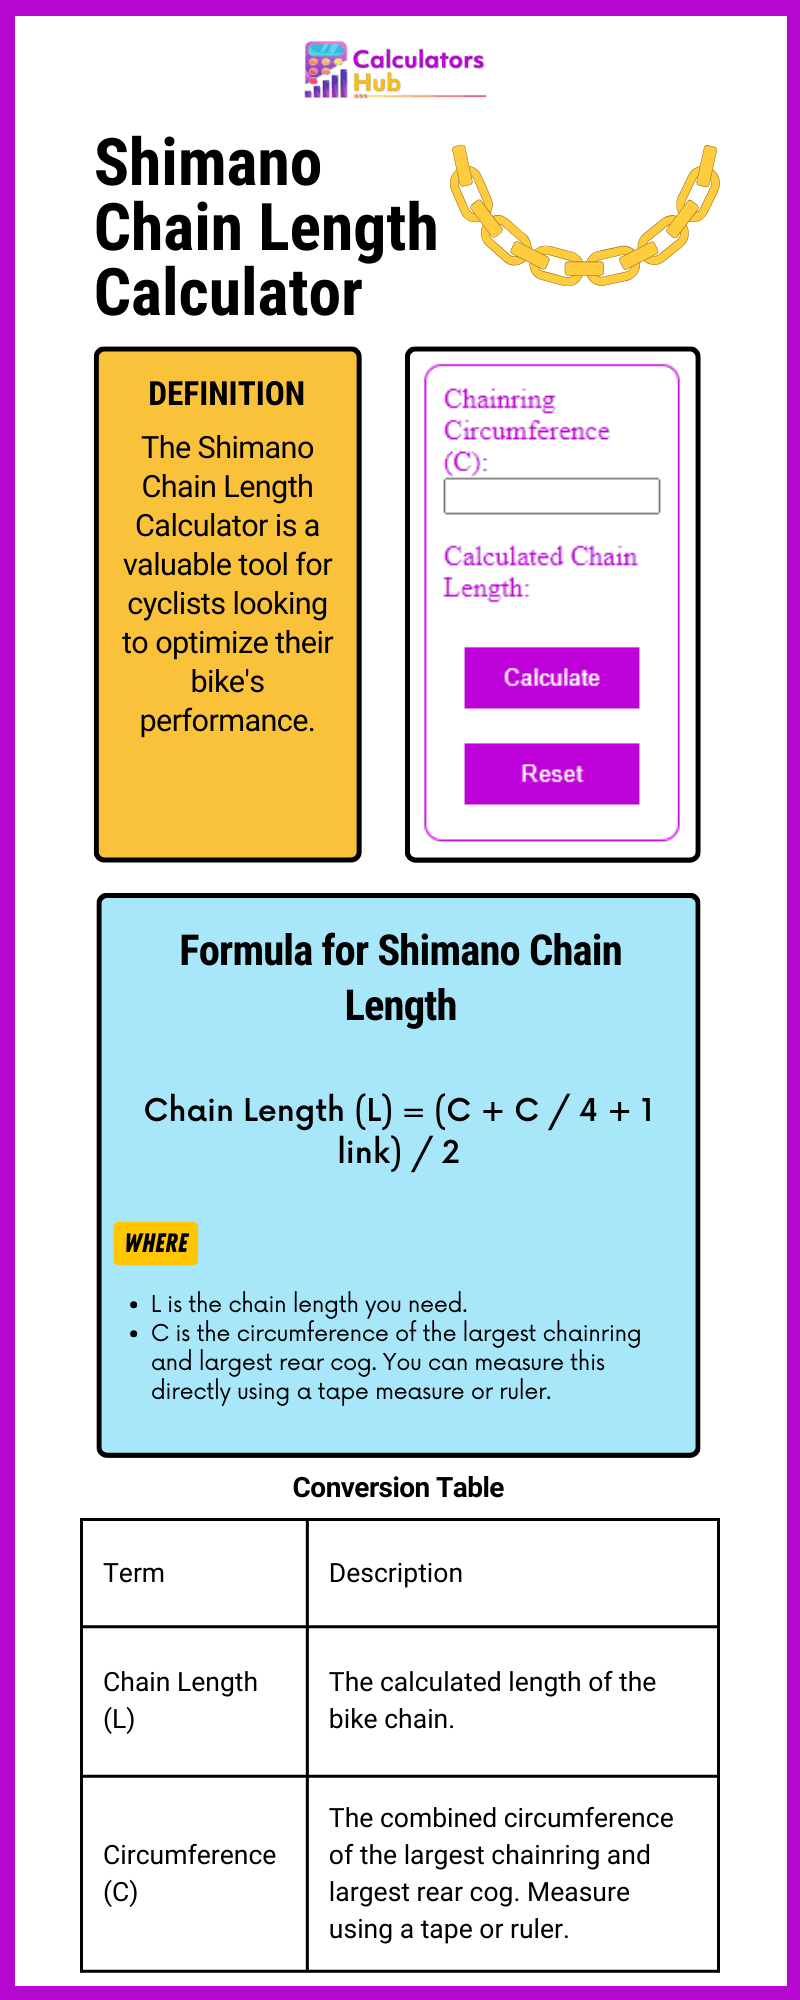 Shimano Chain Length Calculator